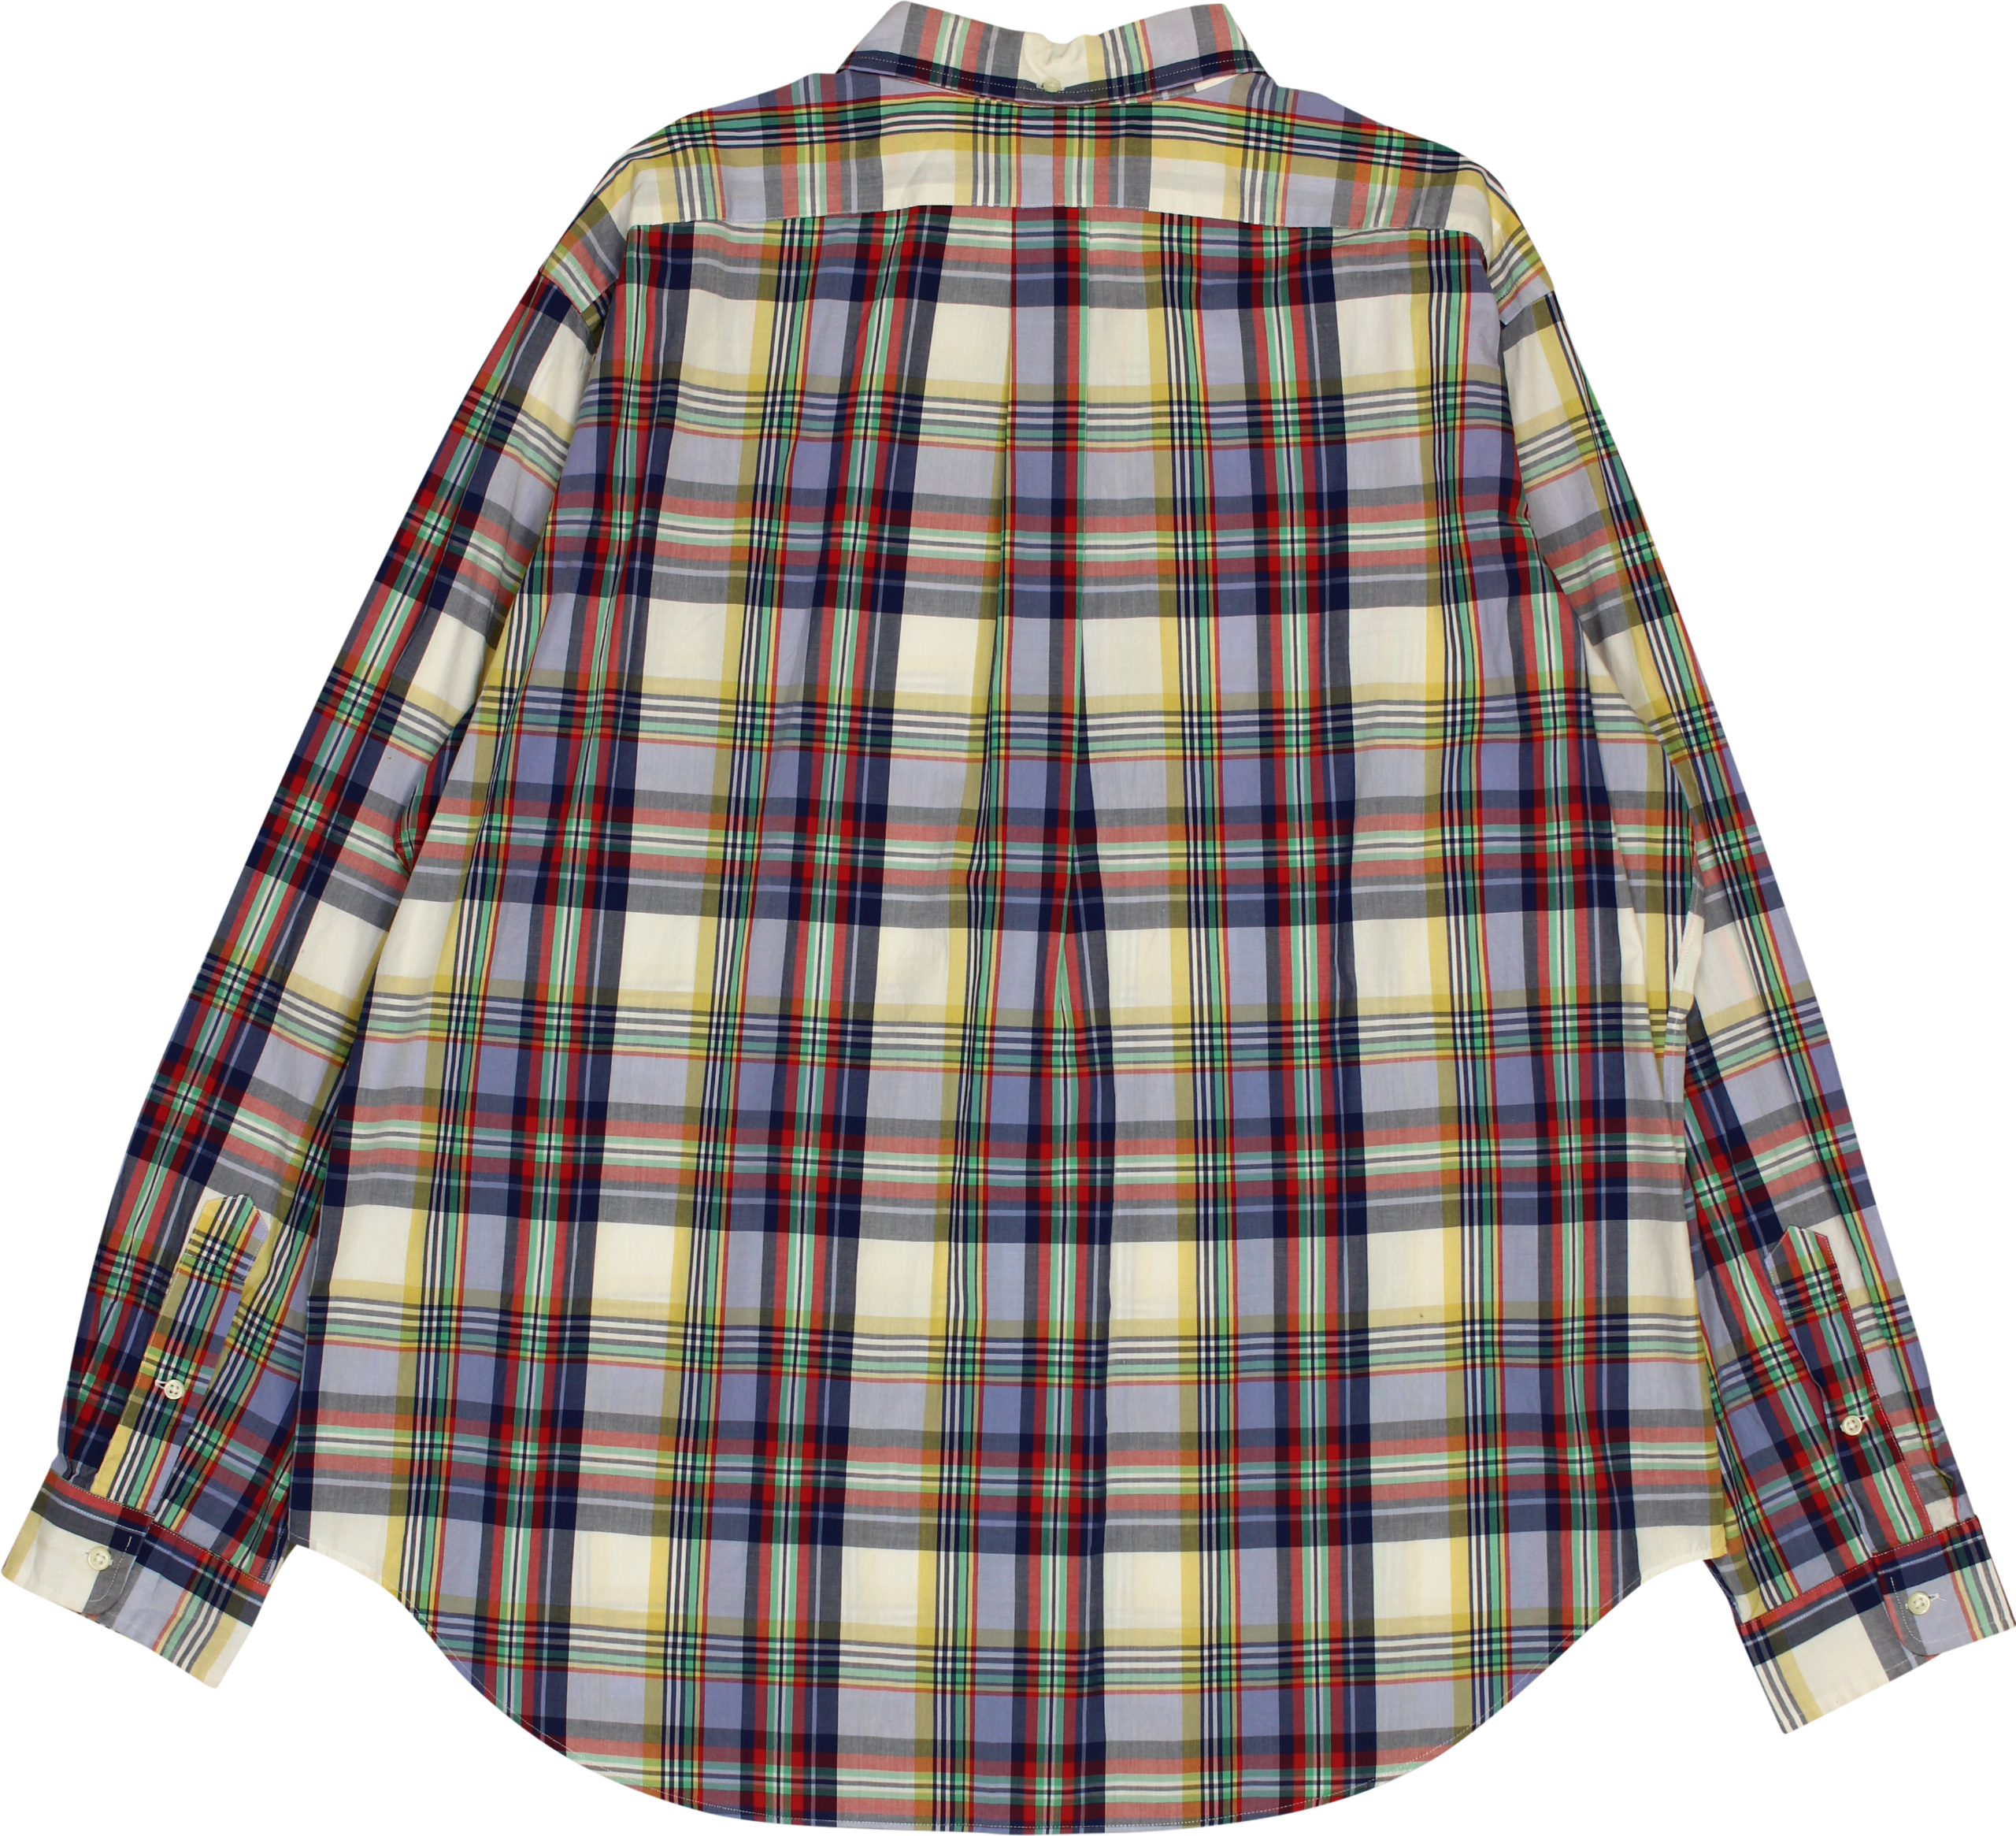 Ralph Lauren - Checkered Shirt by Ralph Lauren- ThriftTale.com - Vintage and second handclothing